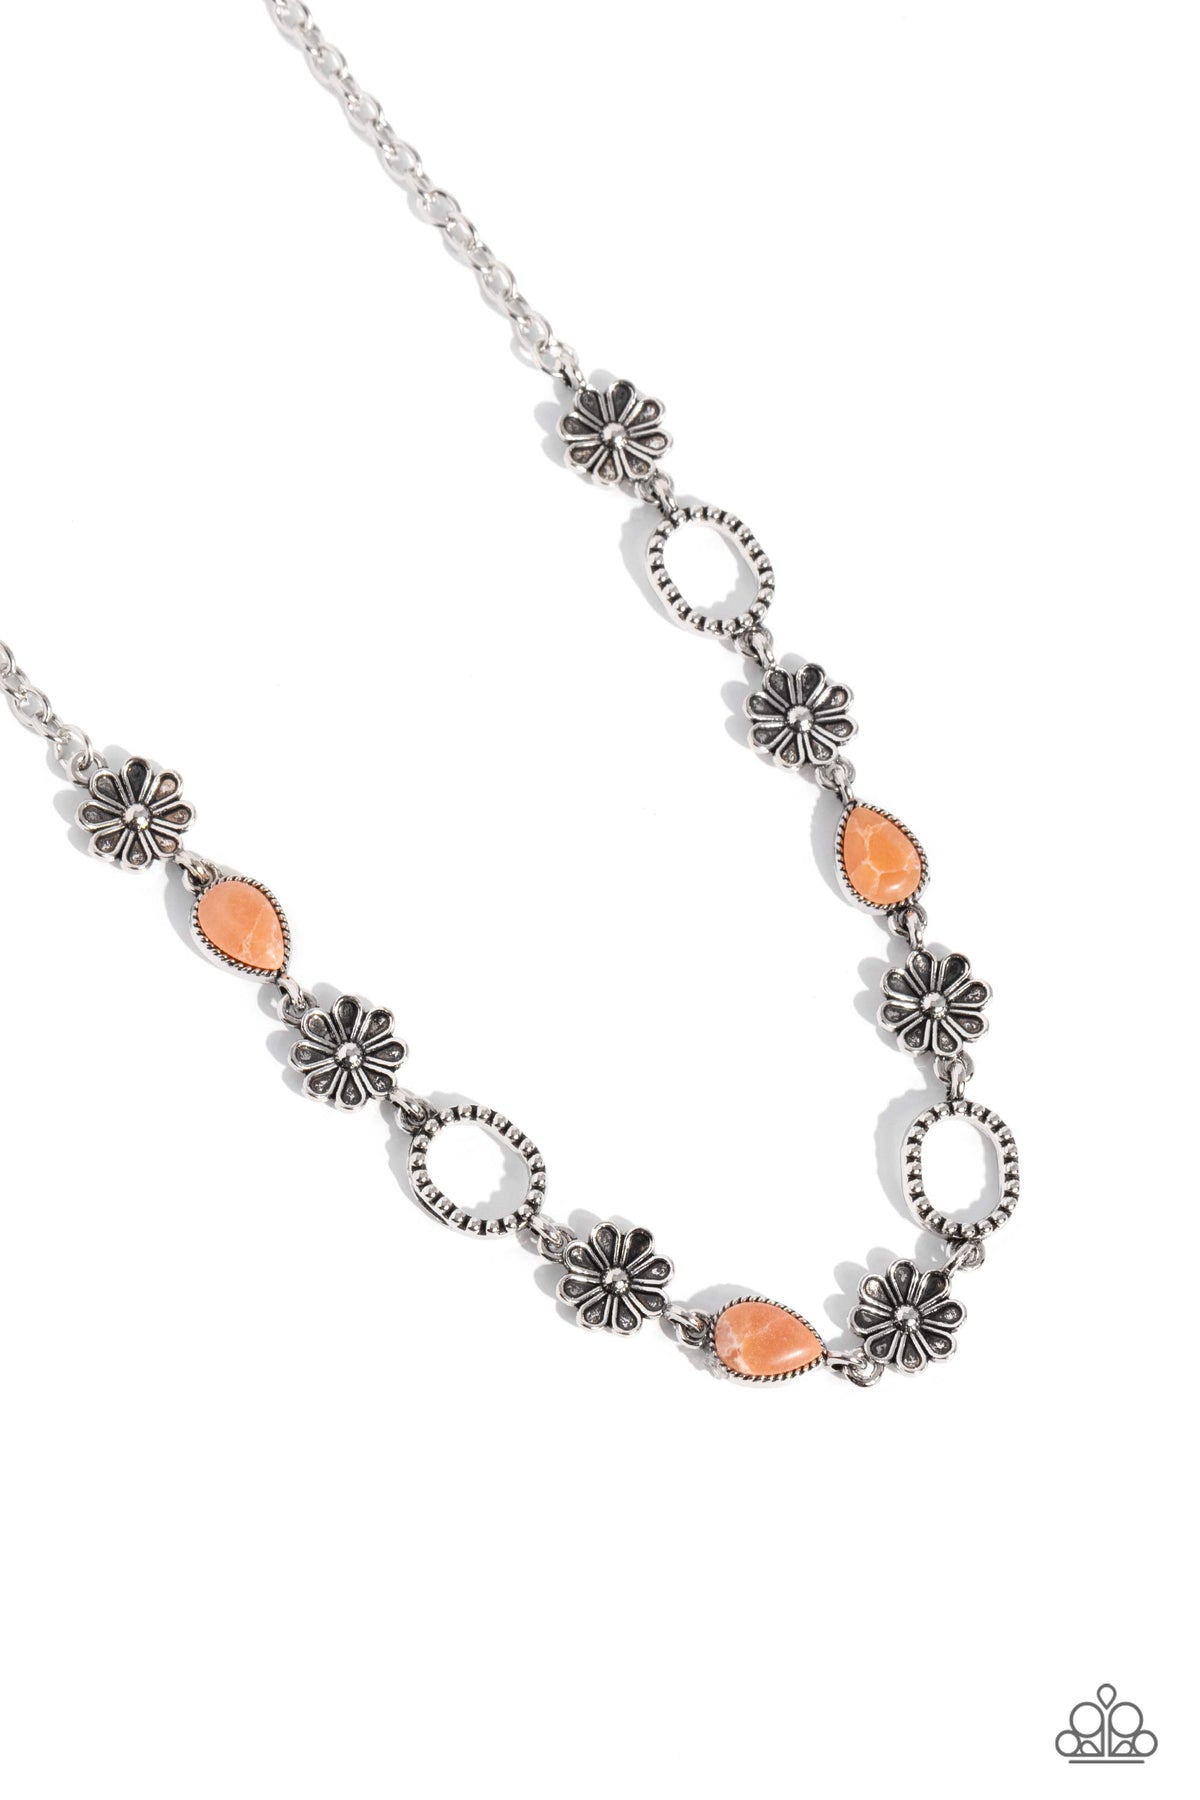 Casablanca Chic Orange Stone Necklace - Paparazzi Accessories- lightbox - CarasShop.com - $5 Jewelry by Cara Jewels